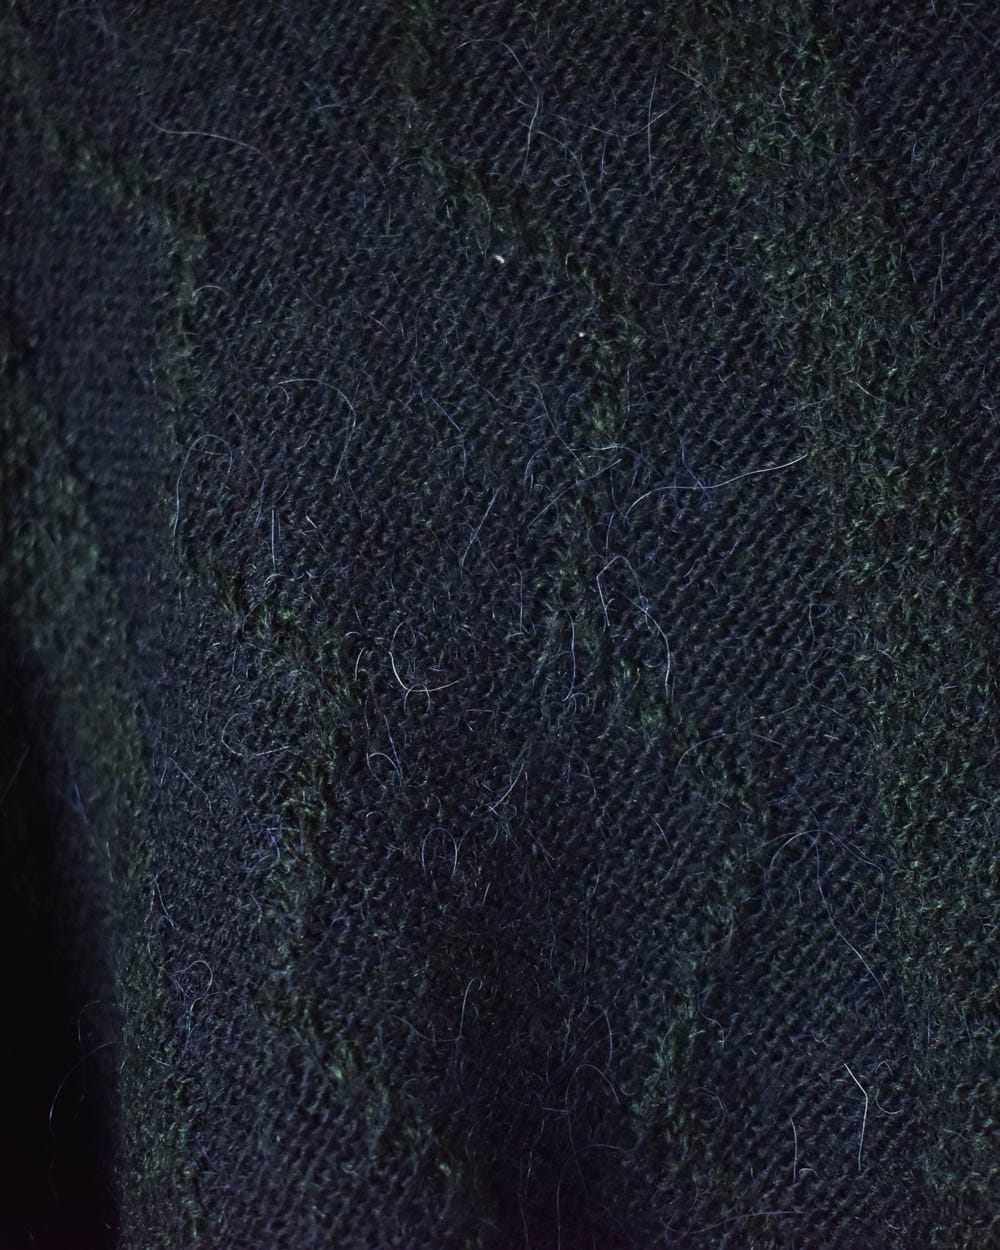 Navy Chemise Lacoste Knitted Sweatshirt - X-Large